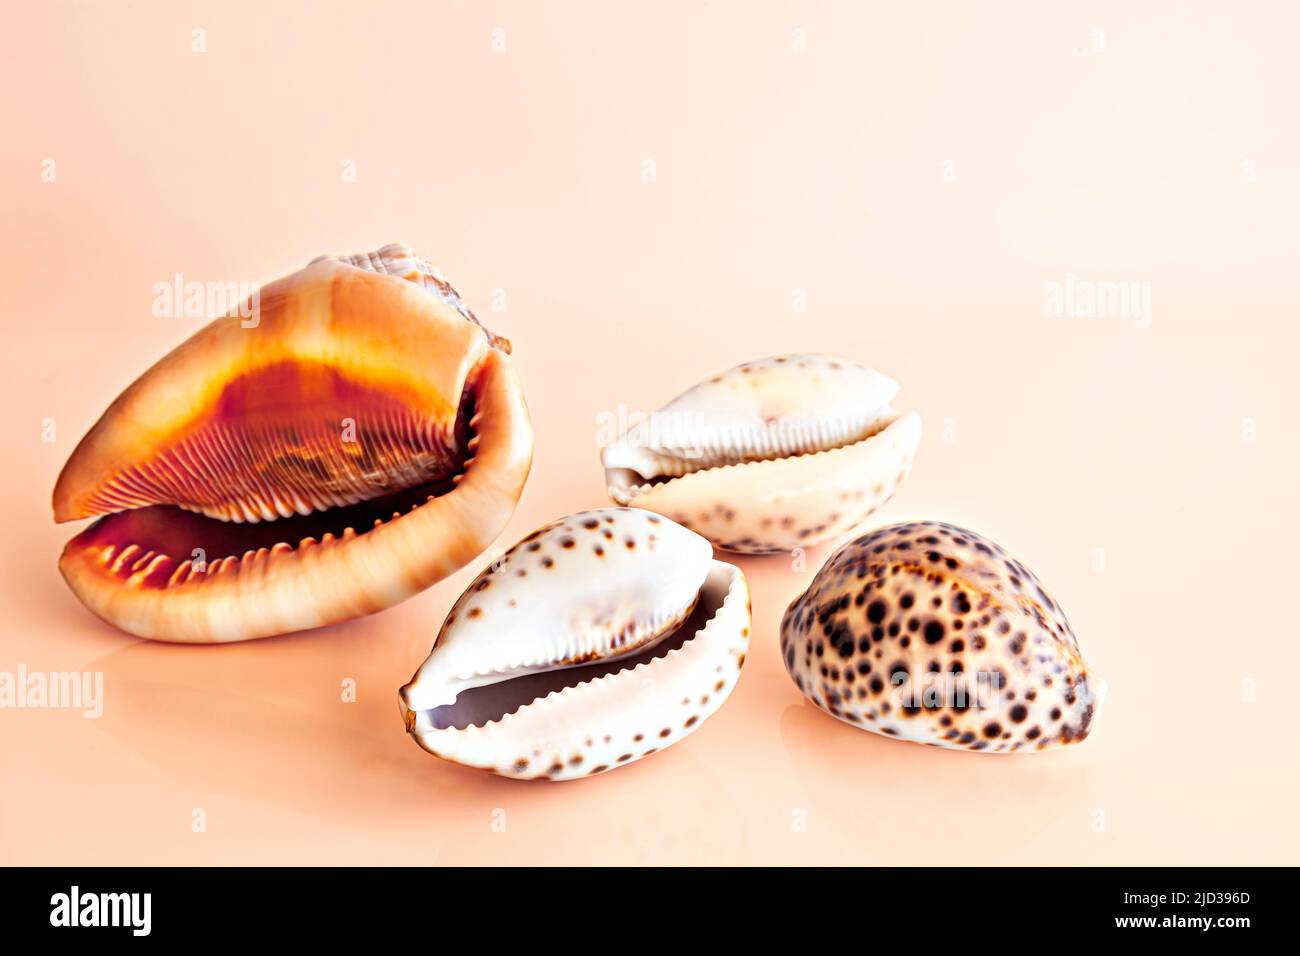 Four mollusk shells, Cassis rufa, turbo petholatus, on an orange background Stock Photo